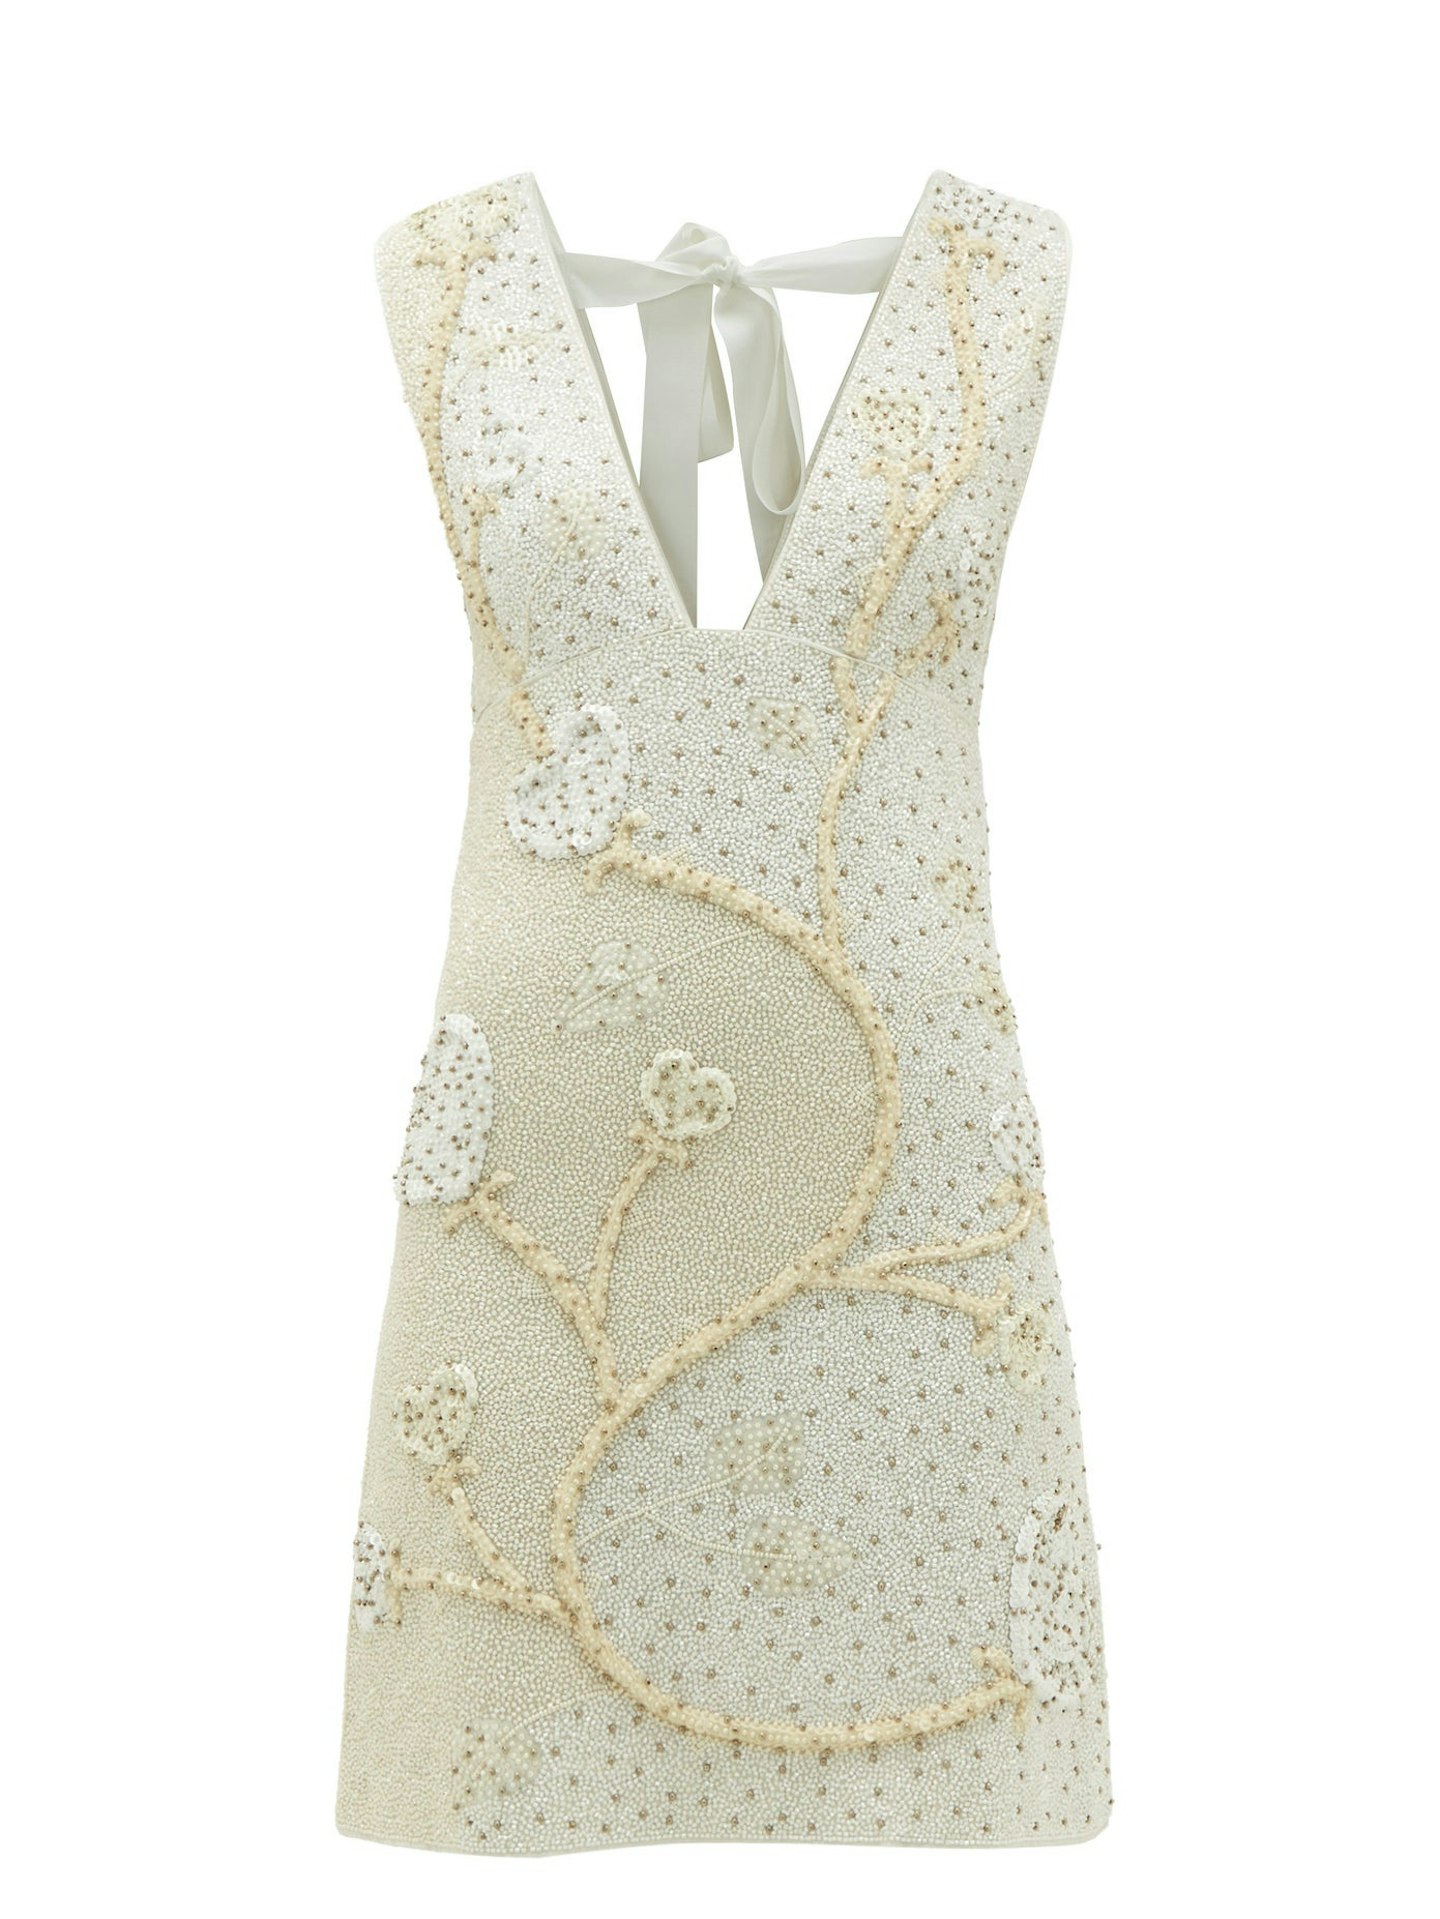 Ganni, Beaded Crepe Mini Dress, £775